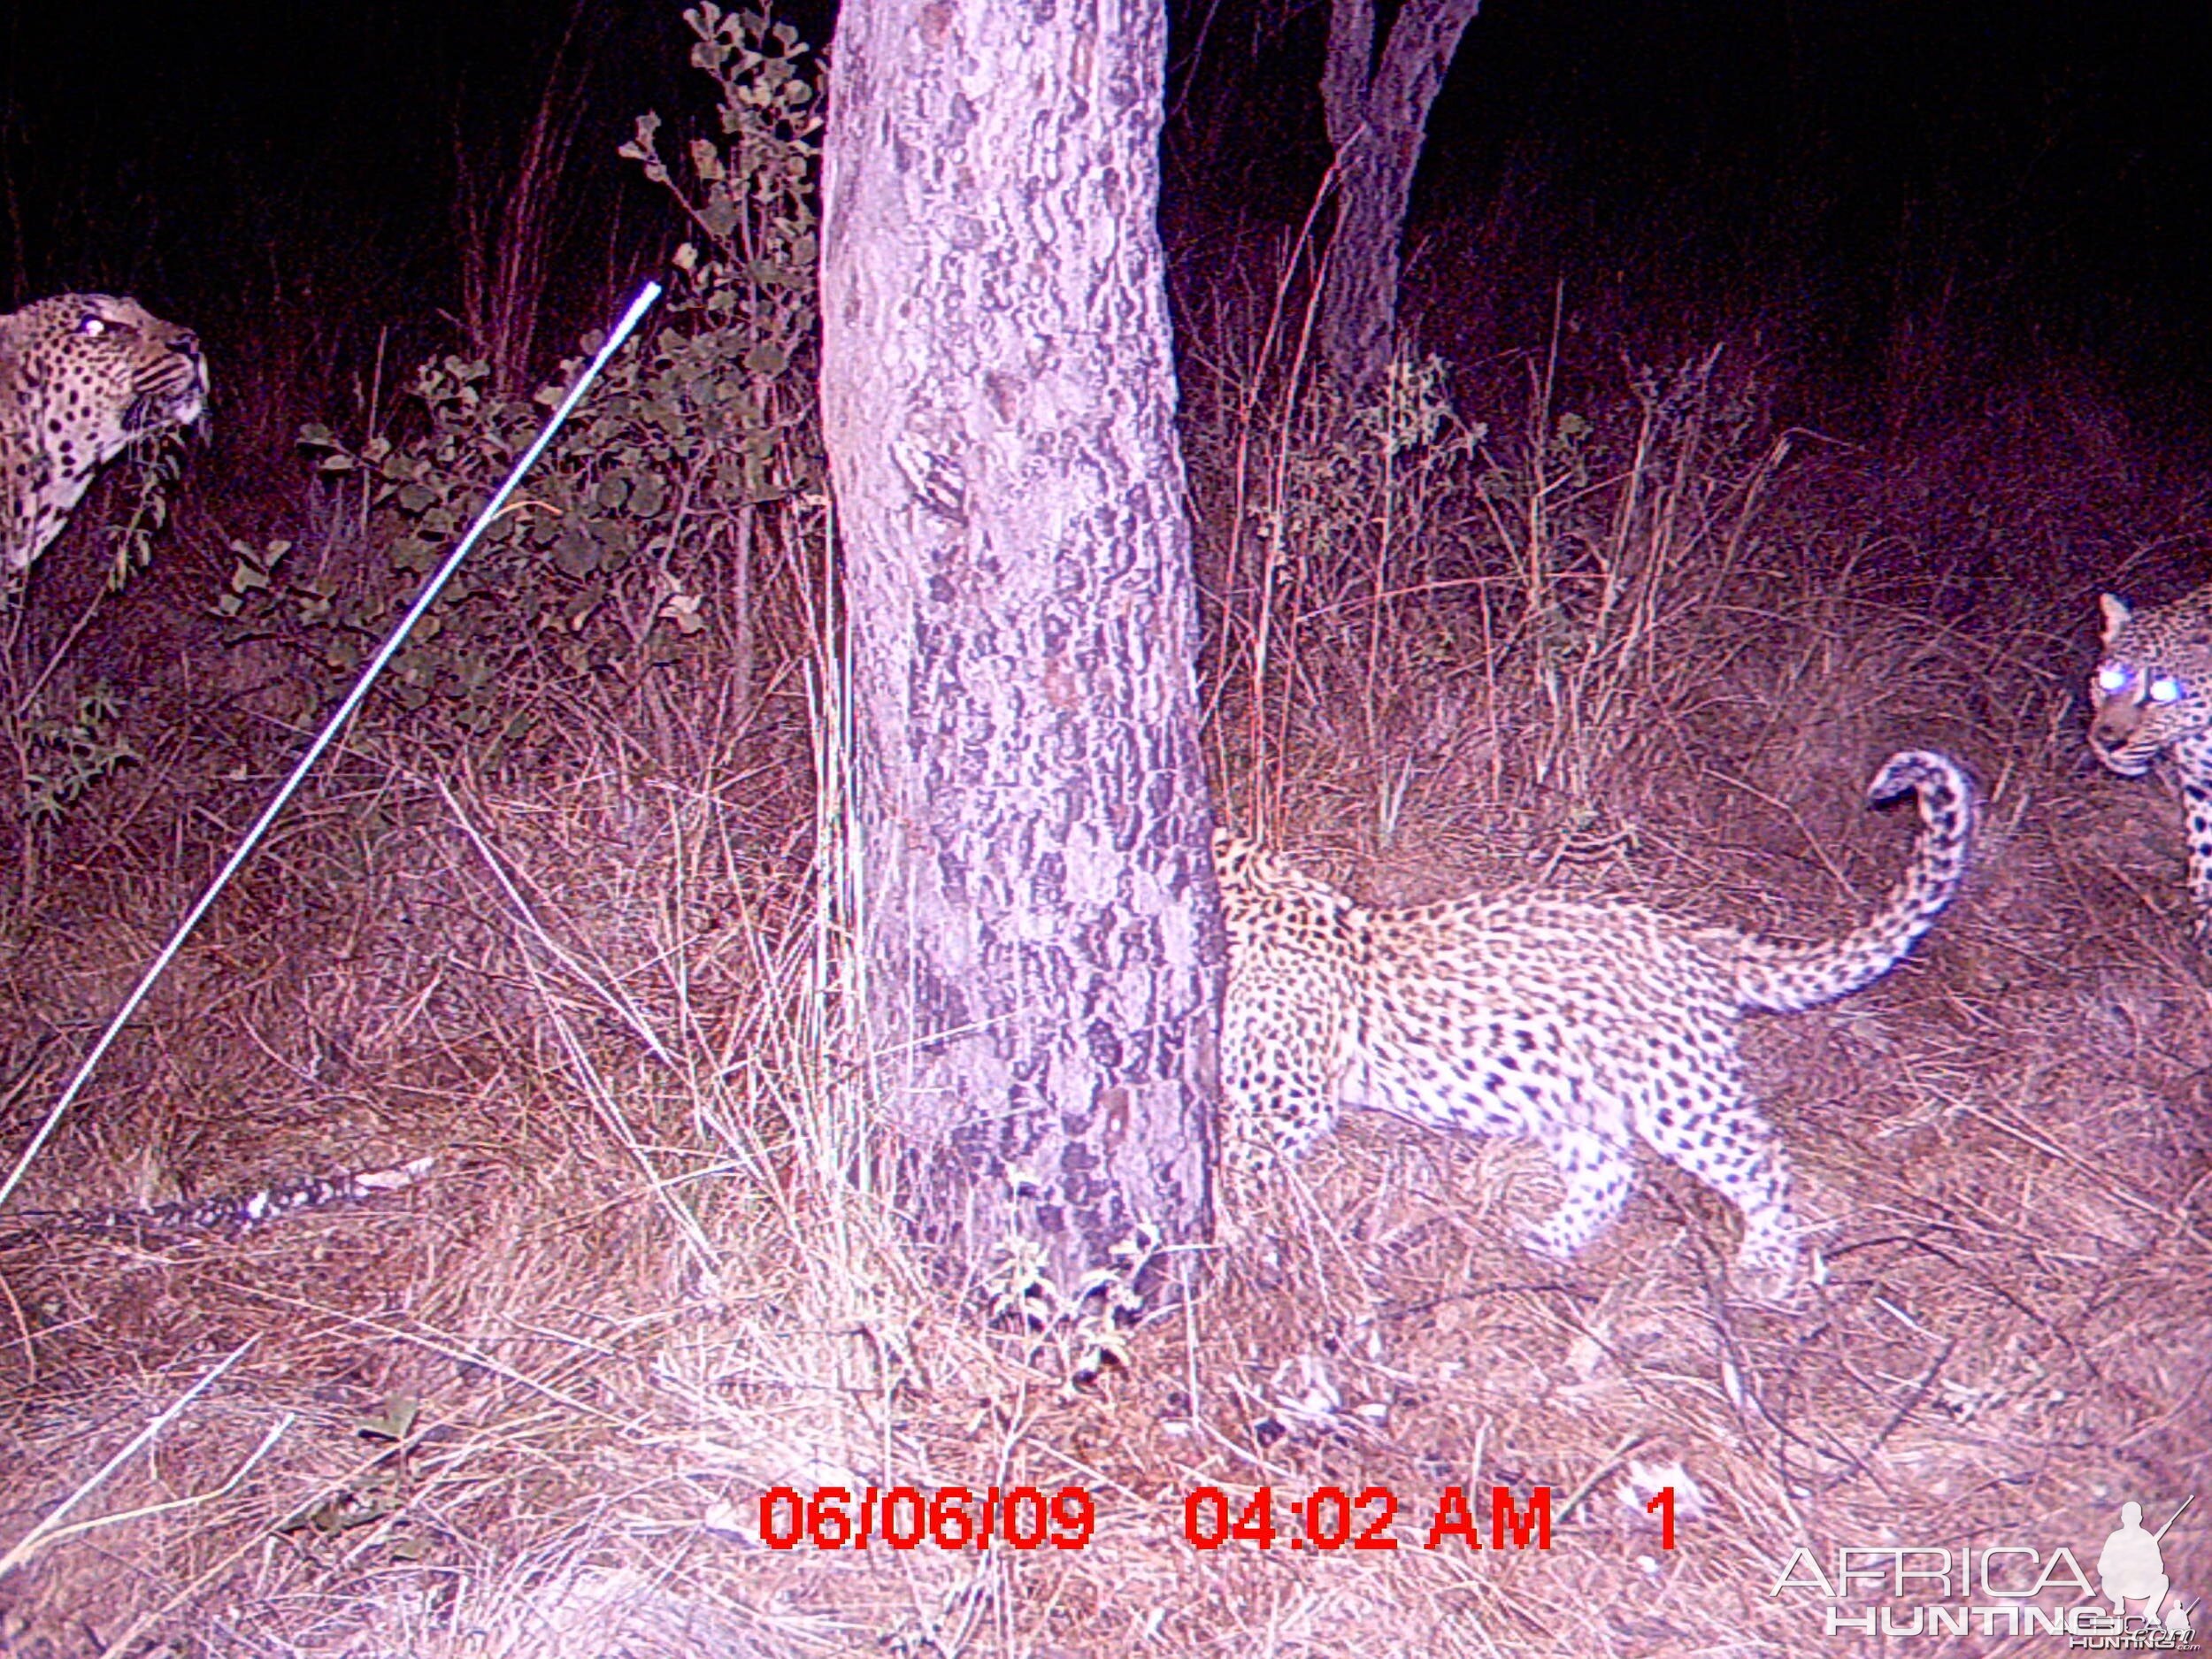 Leopard cub